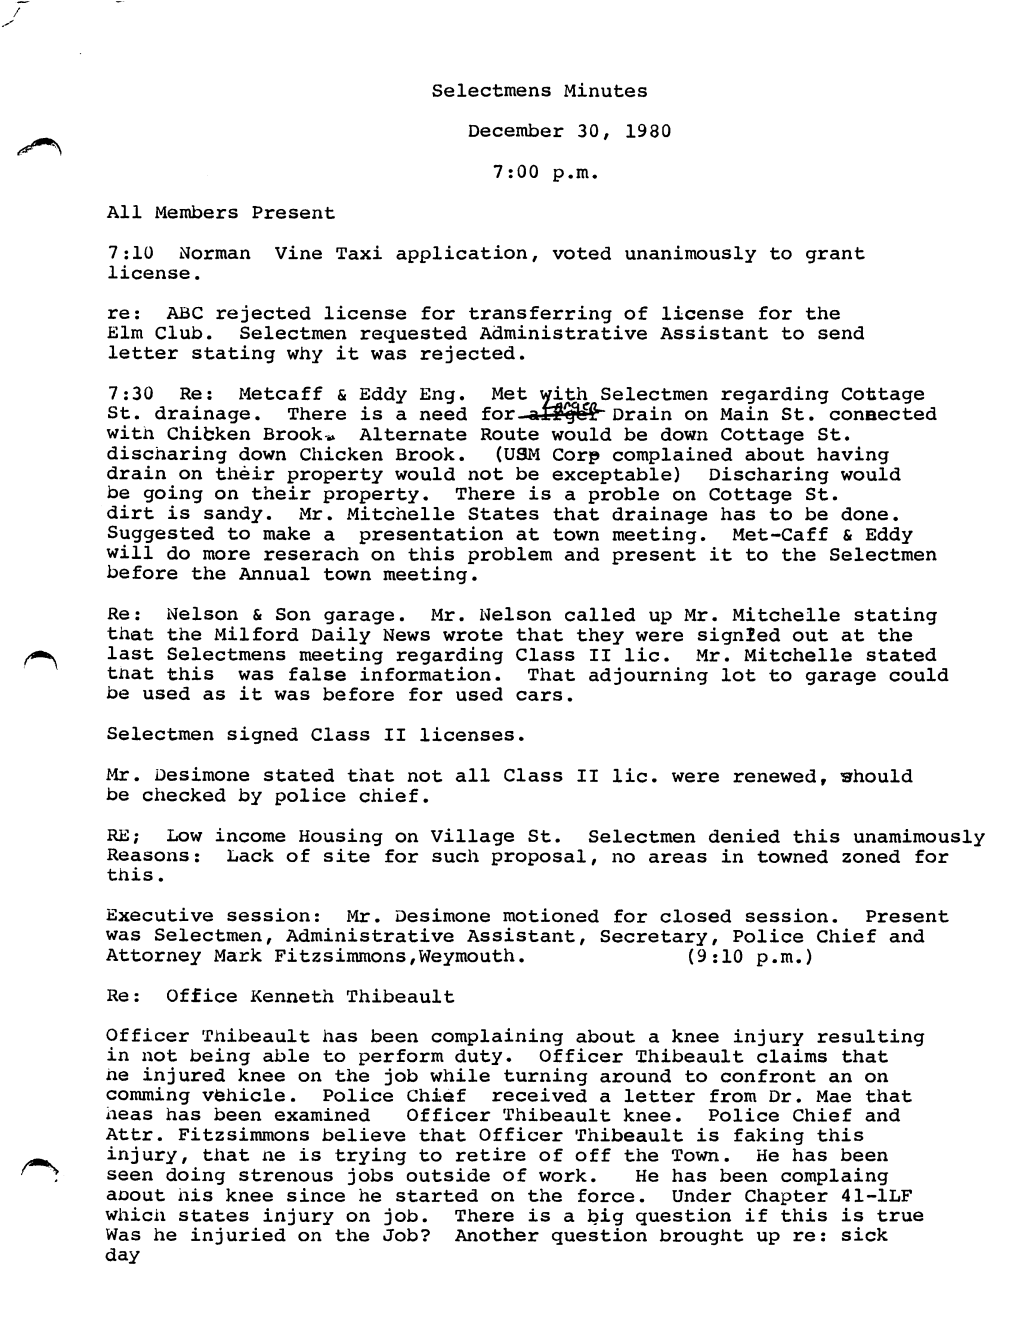 Selectmens Minutes December 30, 1980 7:00 Pm All Members Present